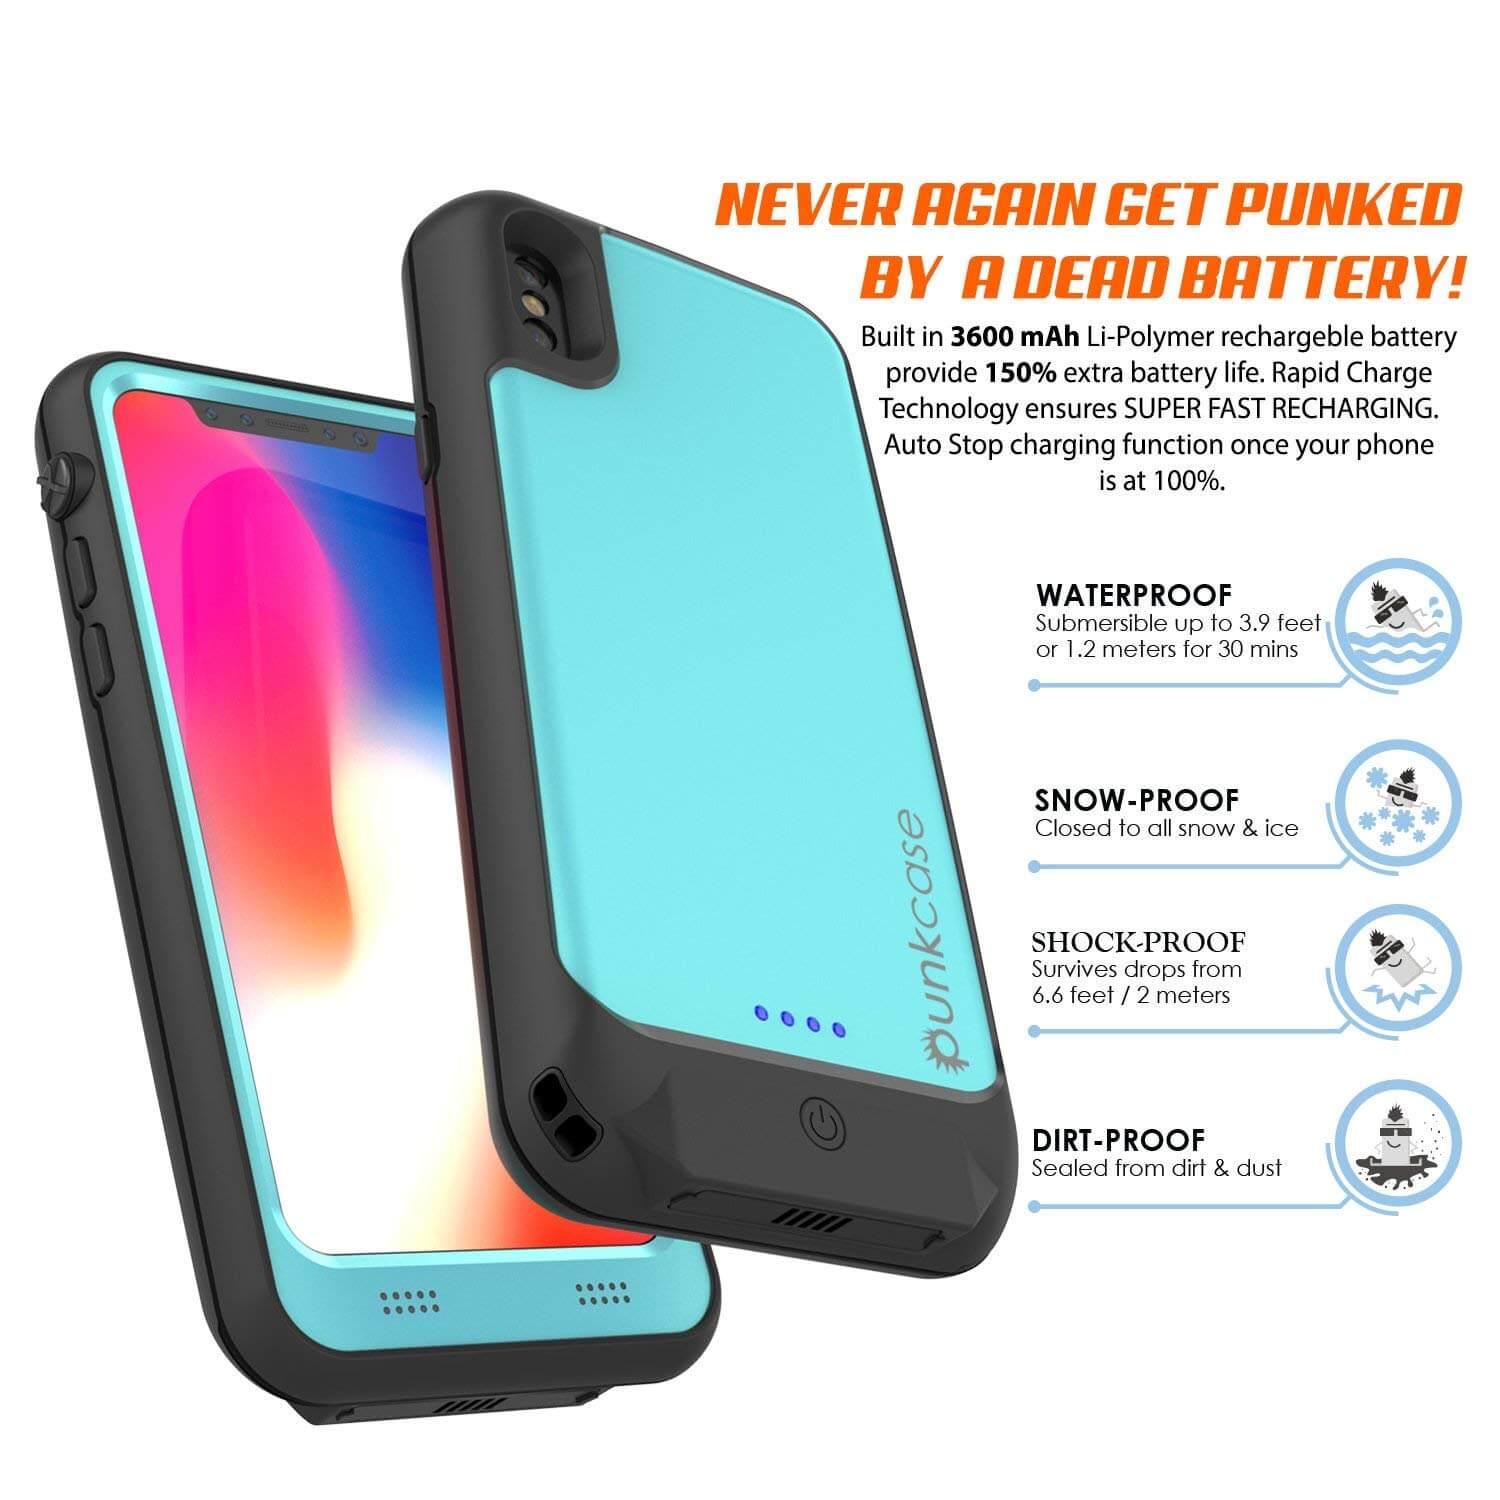 PunkJuice iPhone X Battery Case, Waterproof, IP68 Certified [Teal]